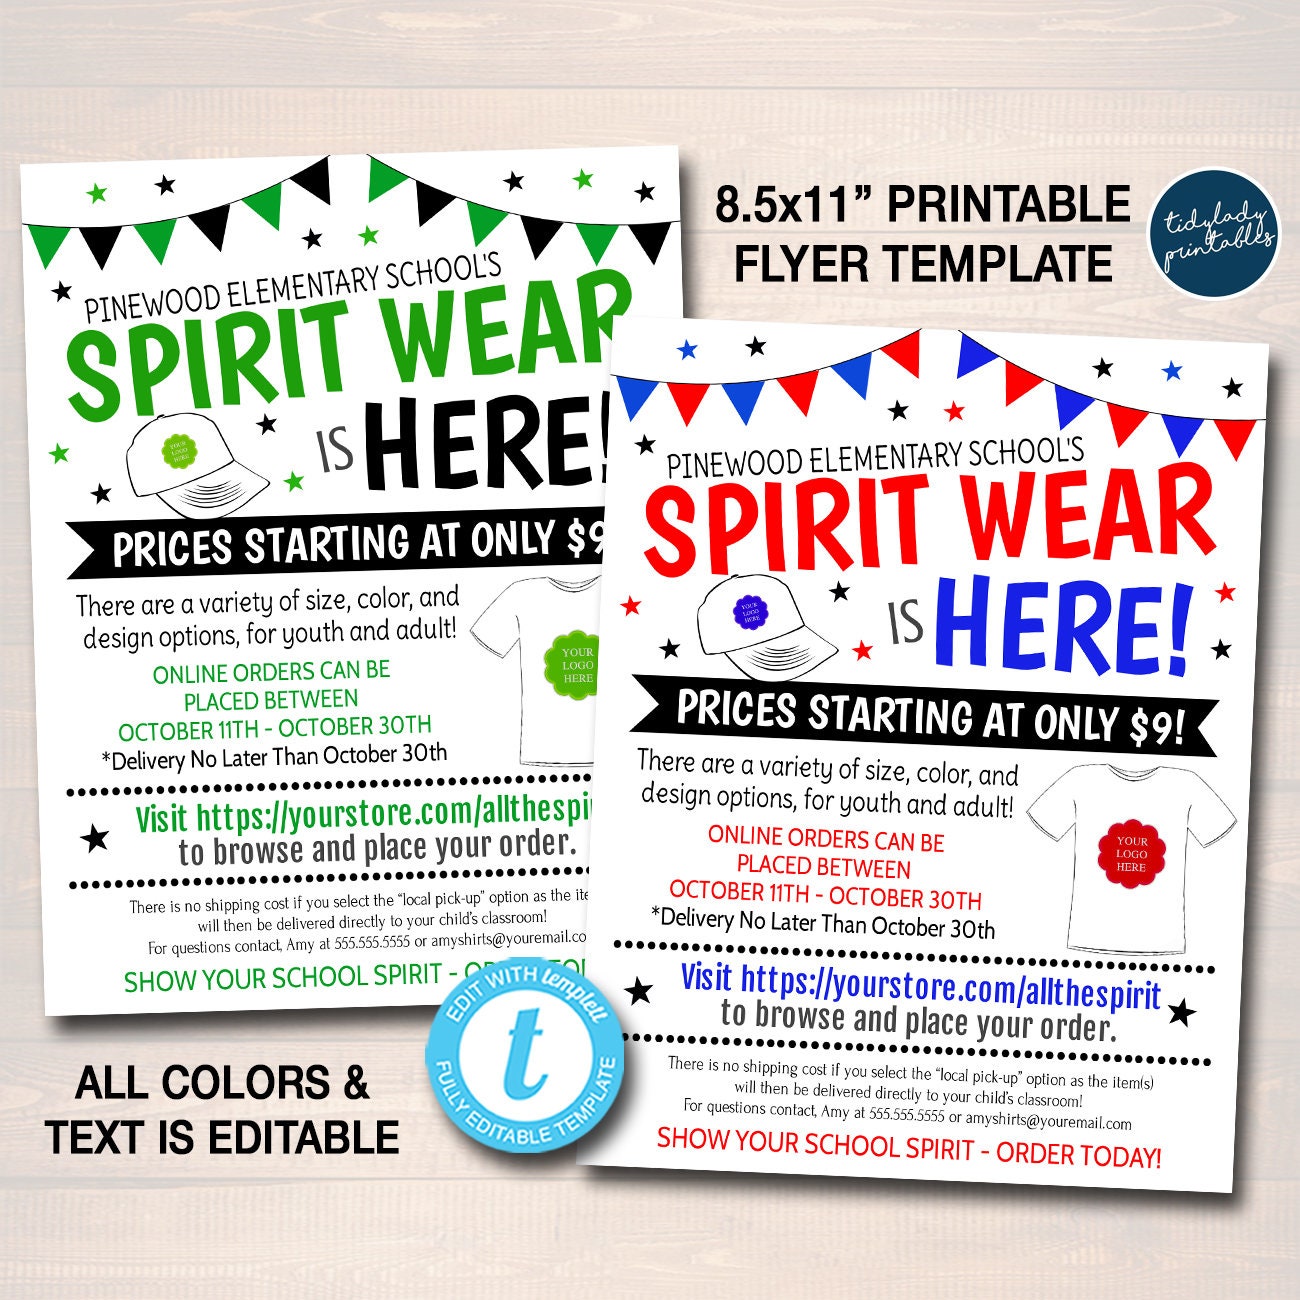 T-shirt Design Contest Flyer Template, Clothing T-shirt Sale, Printable  Flyer, Church Nonprofit School PTO PTA Event, Editable Template